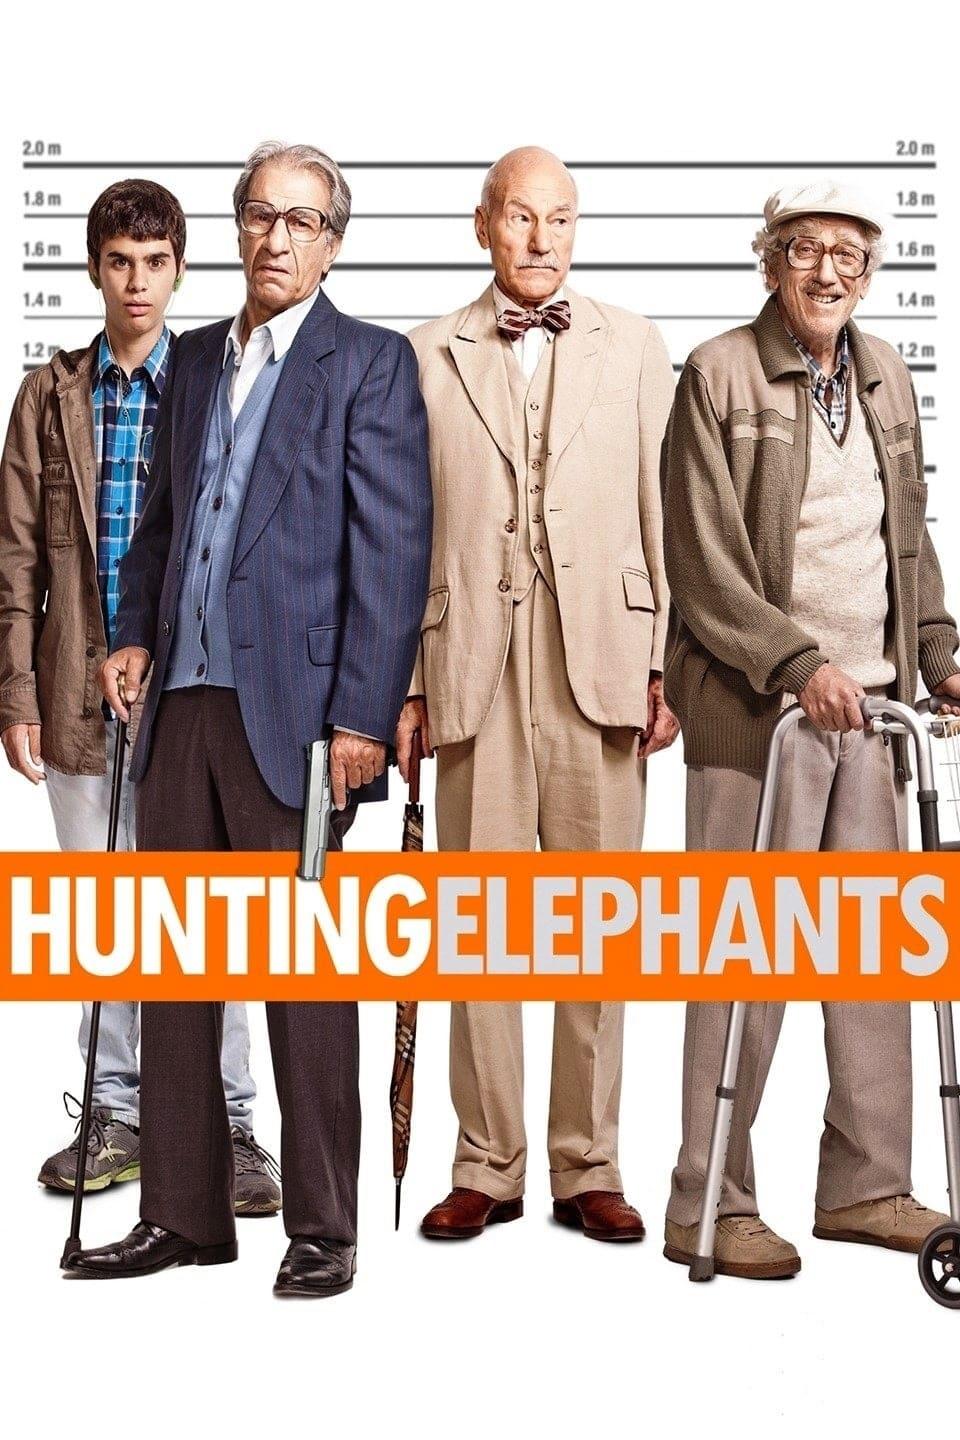 Hunting Elephants poster